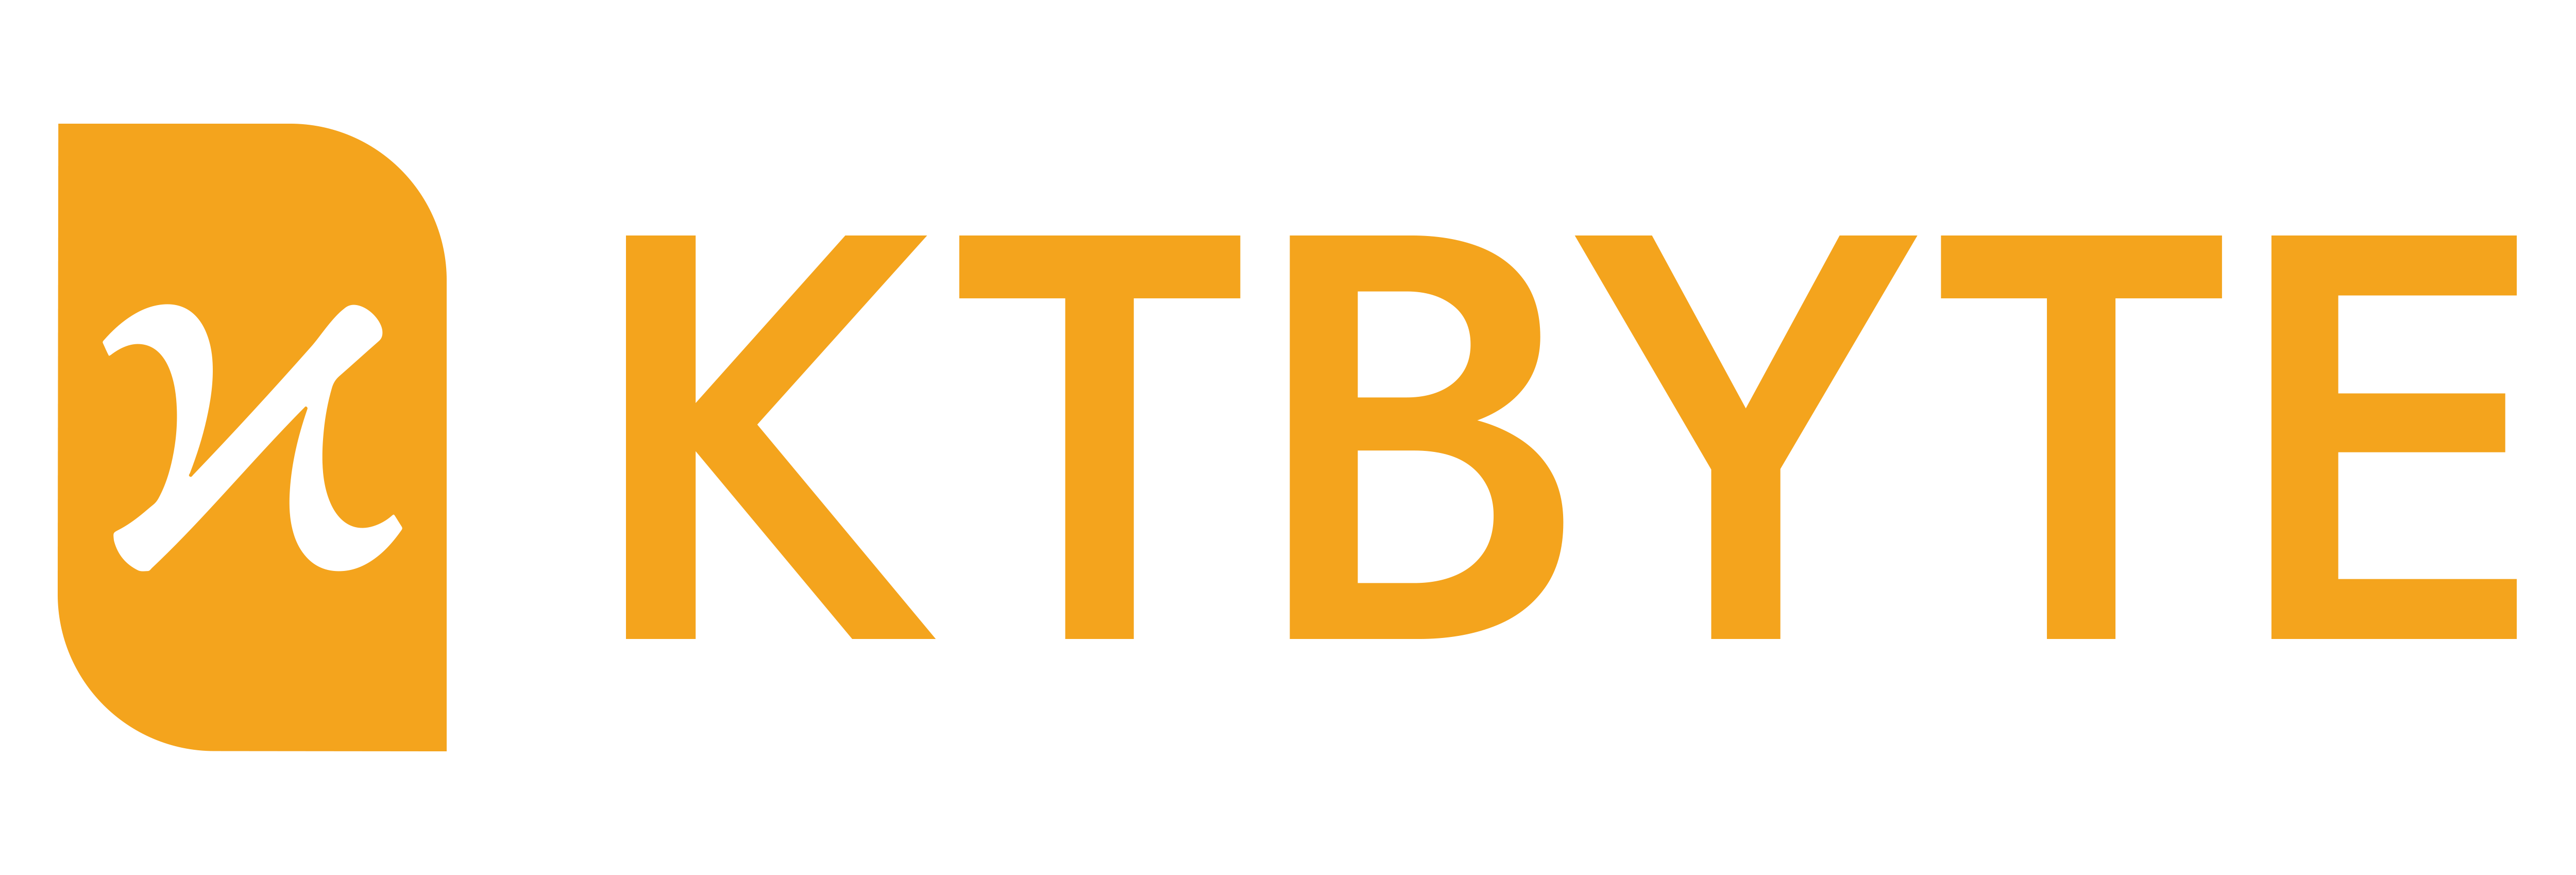 KTBYTE